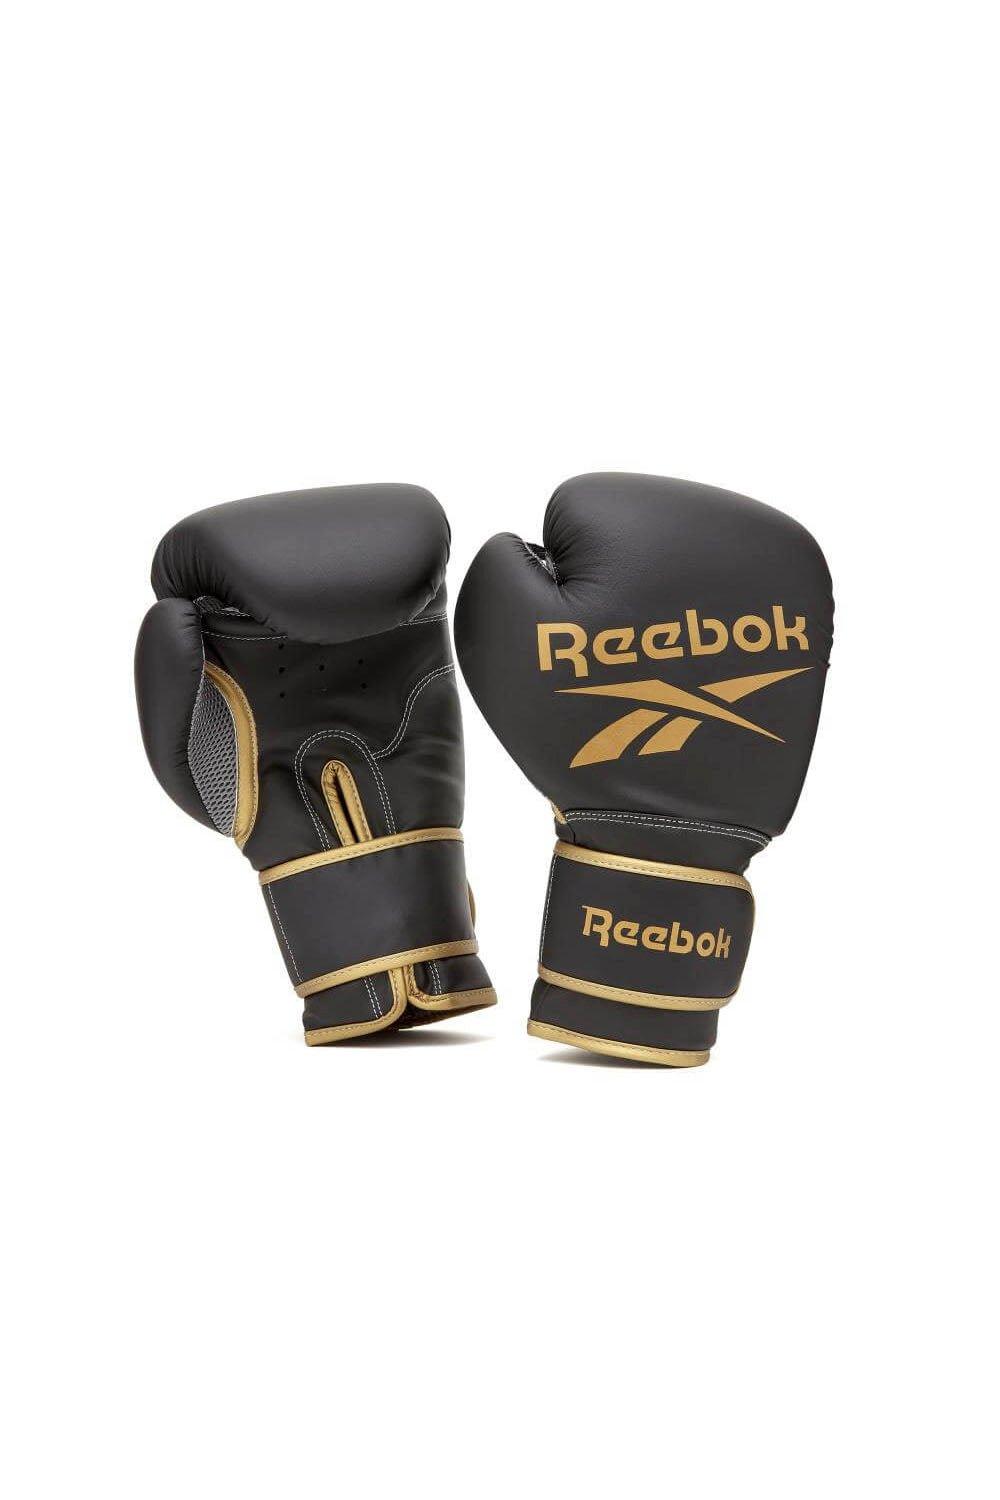 Reebok Boxing Gloves - Gold/Black|Size: 16oz|black